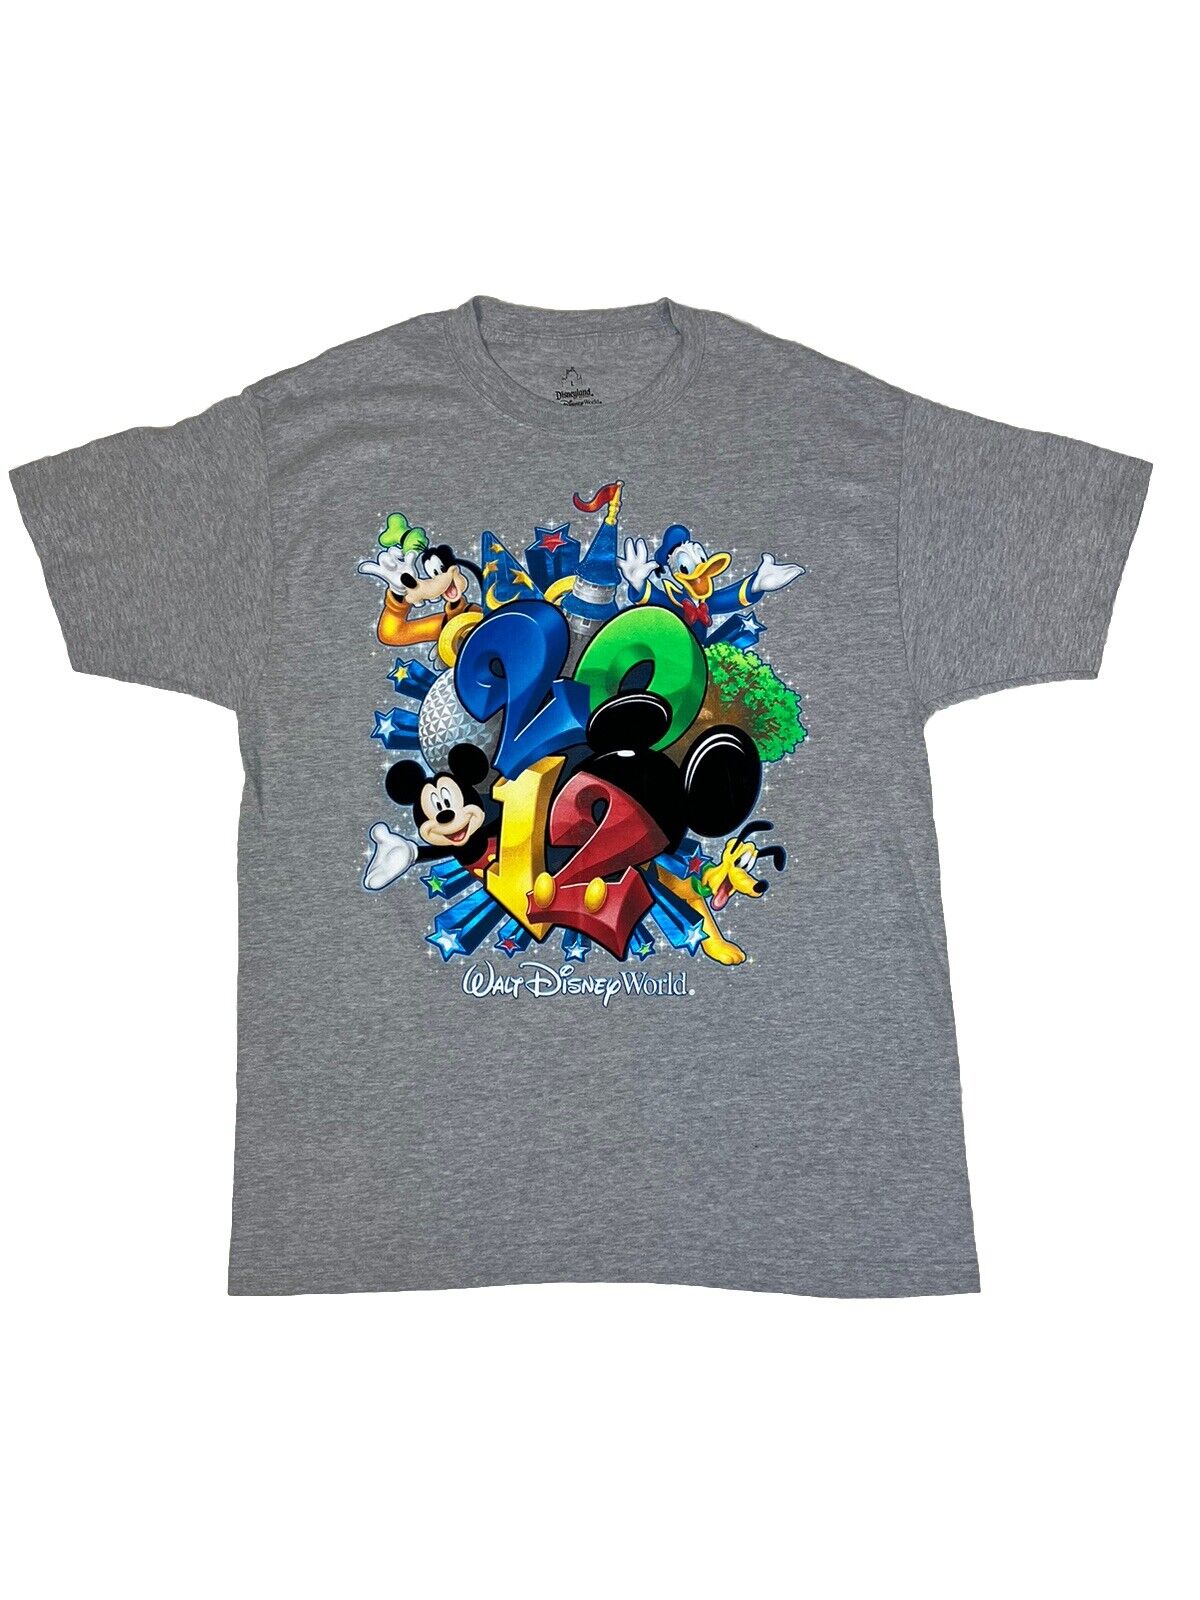 Disneyland Resort Walt Disney World 2012 Authentic Hanes T-shirt Size Large